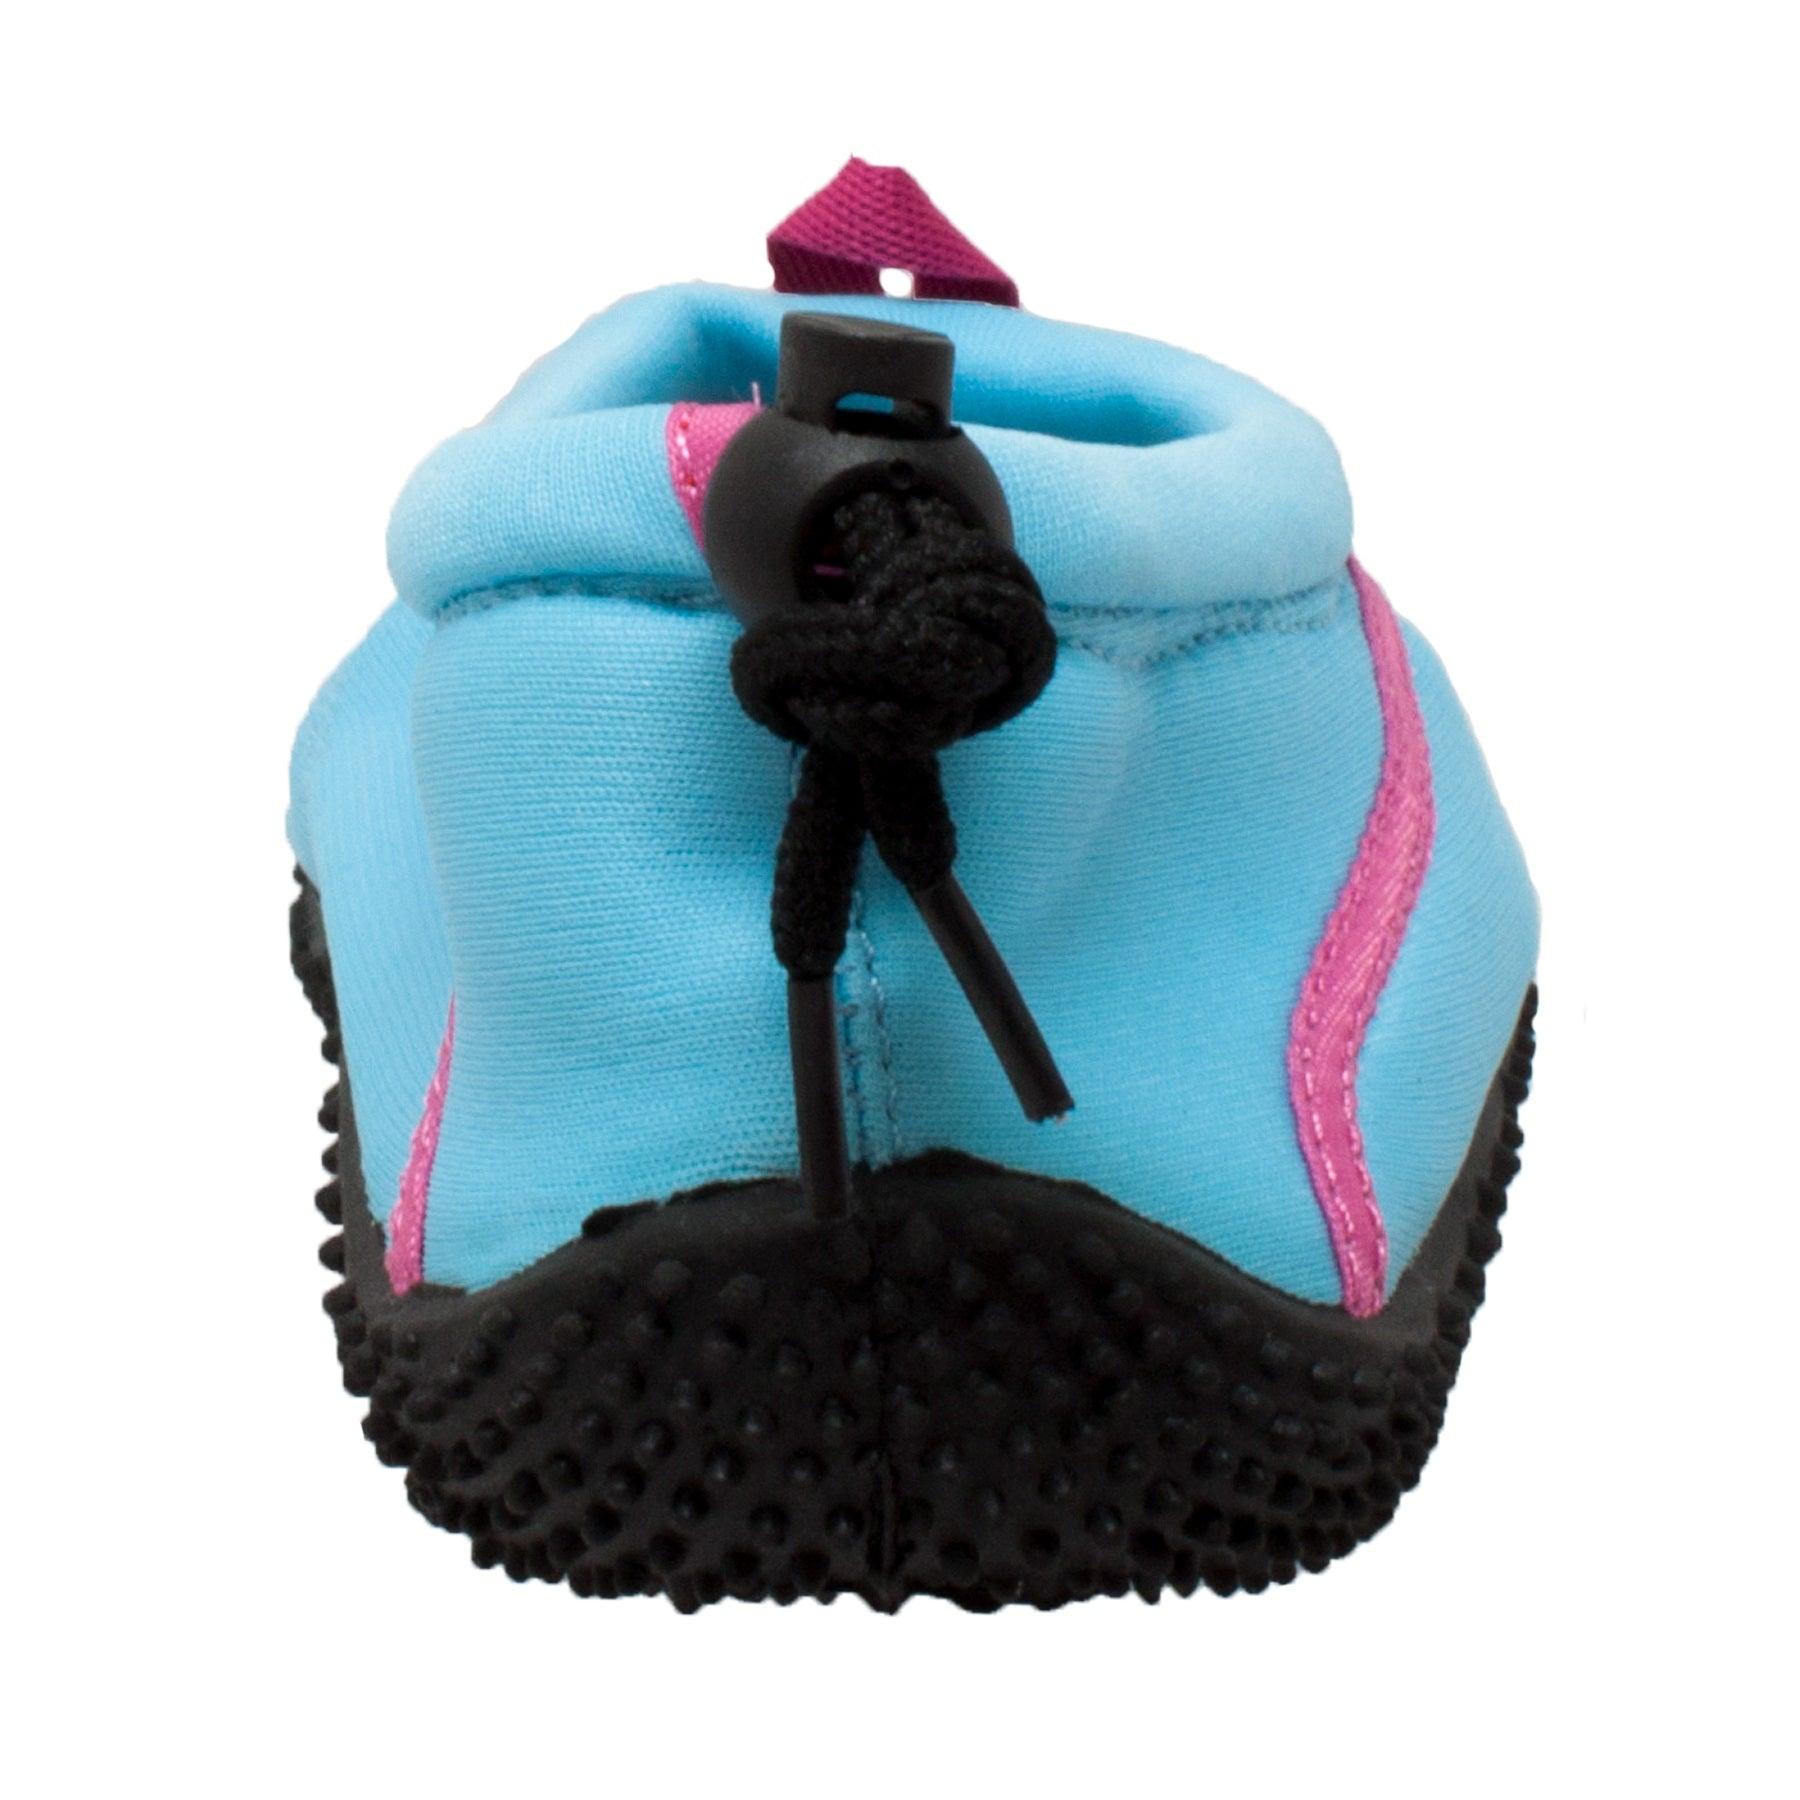 Tecs Women's Aquasock Slip On Blue/Pink - Flyclothing LLC